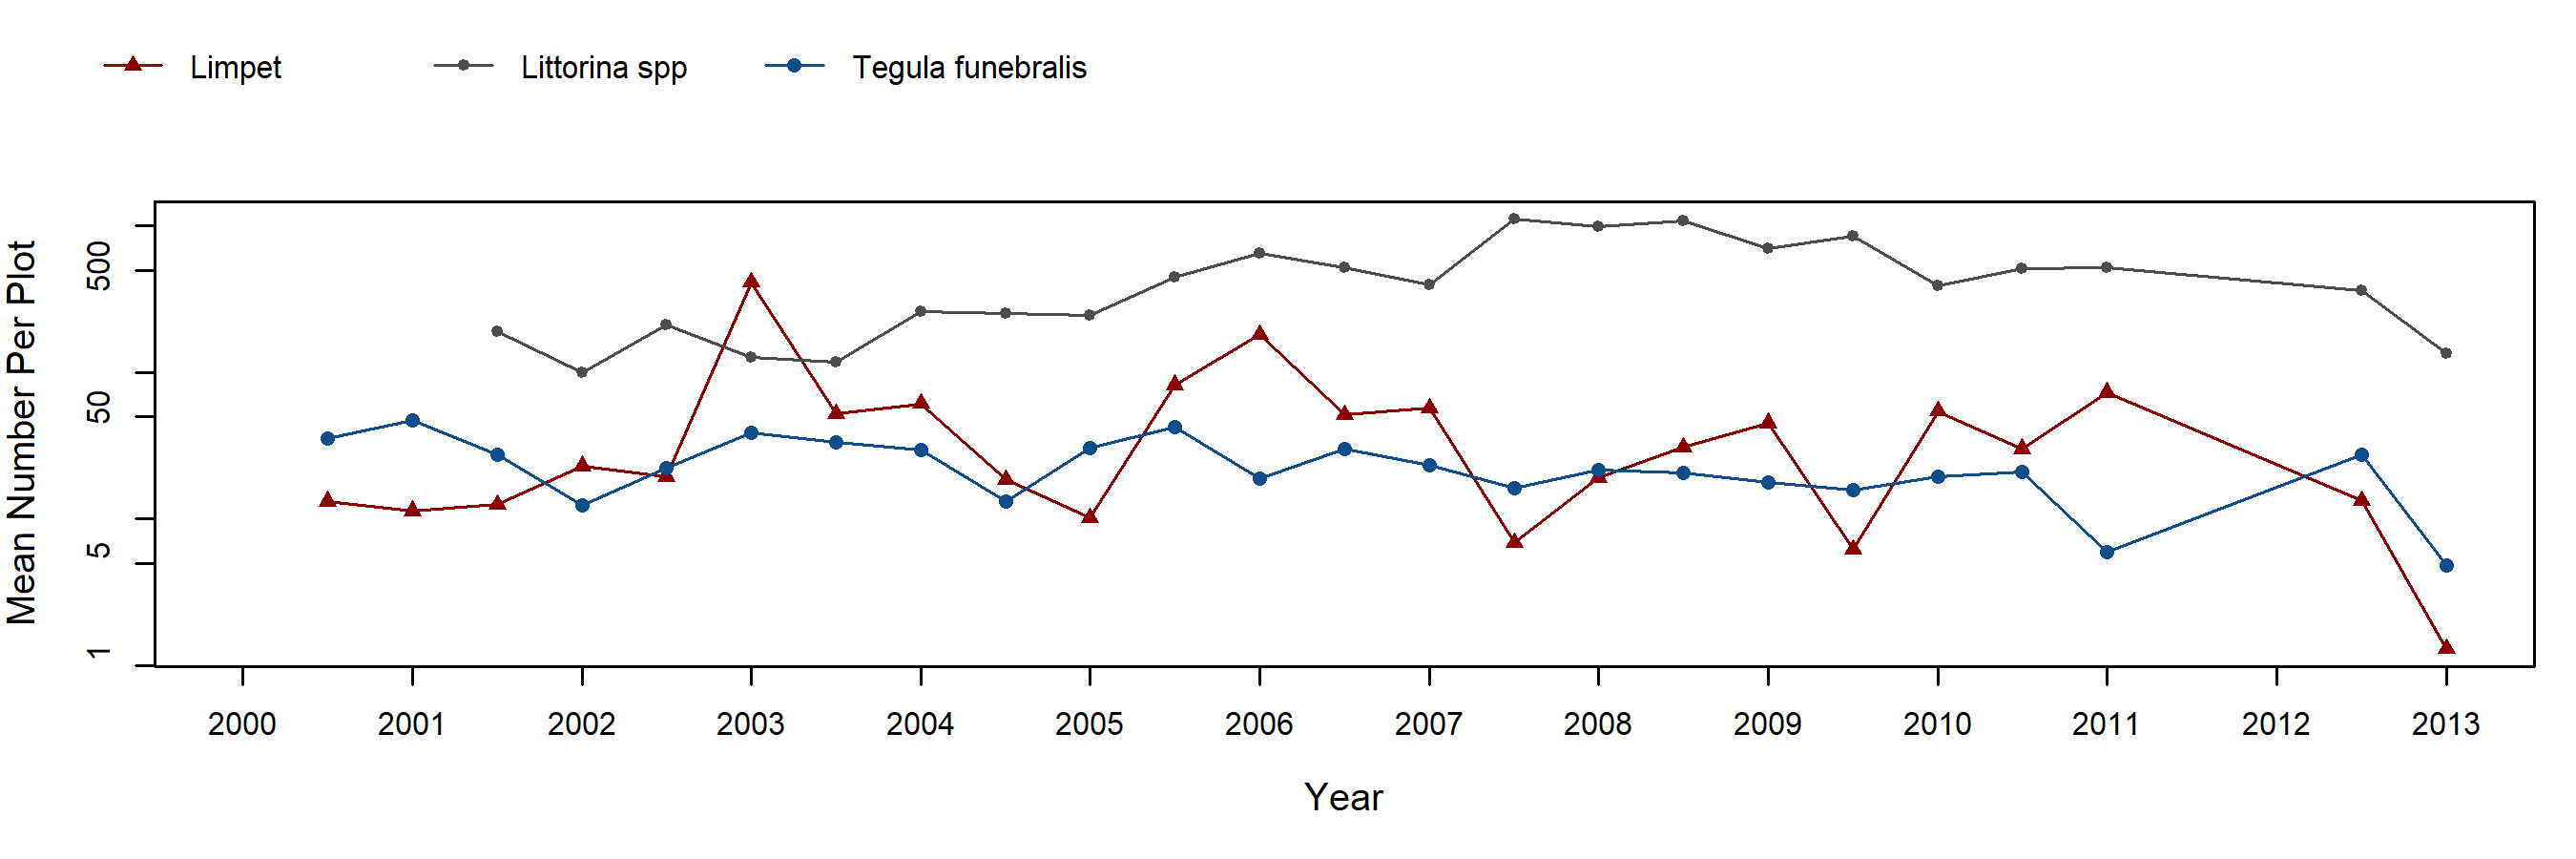 Hazards Endocladia trend plot